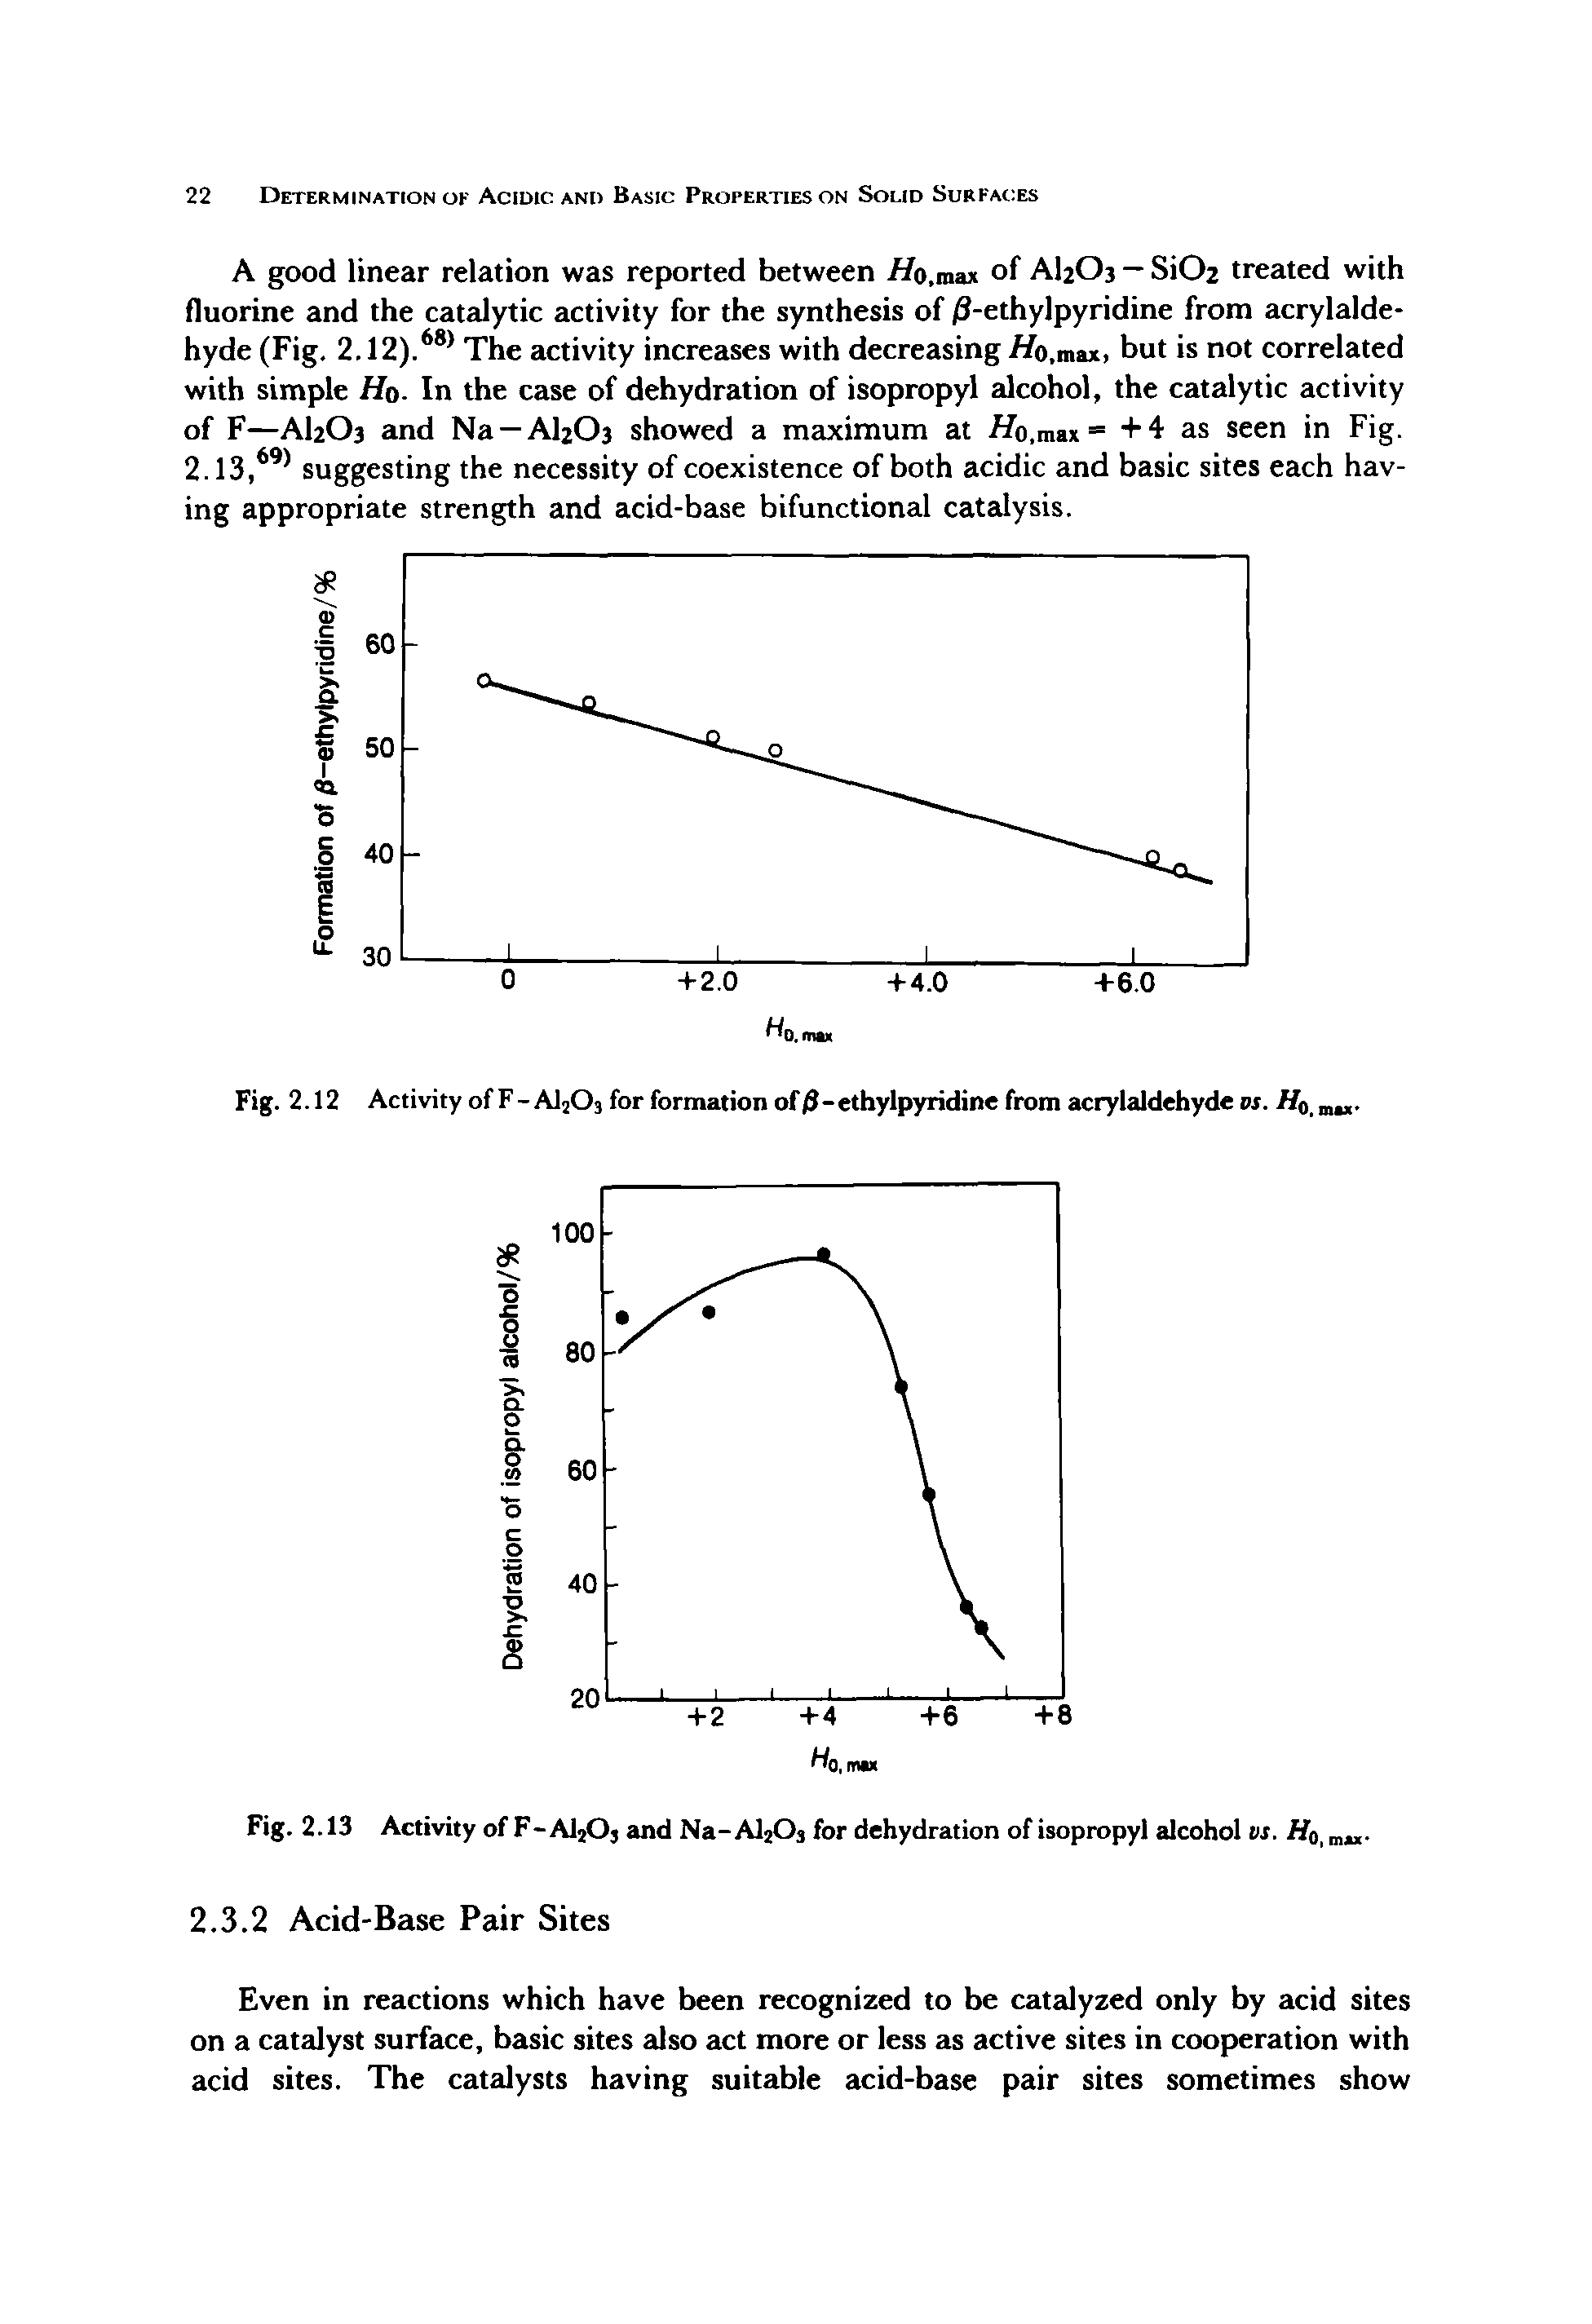 Fig. 2.13 Activity of F-AljOj and Na-AljOj for dehydration of isopropyl alcohol vs. Ho, mw...